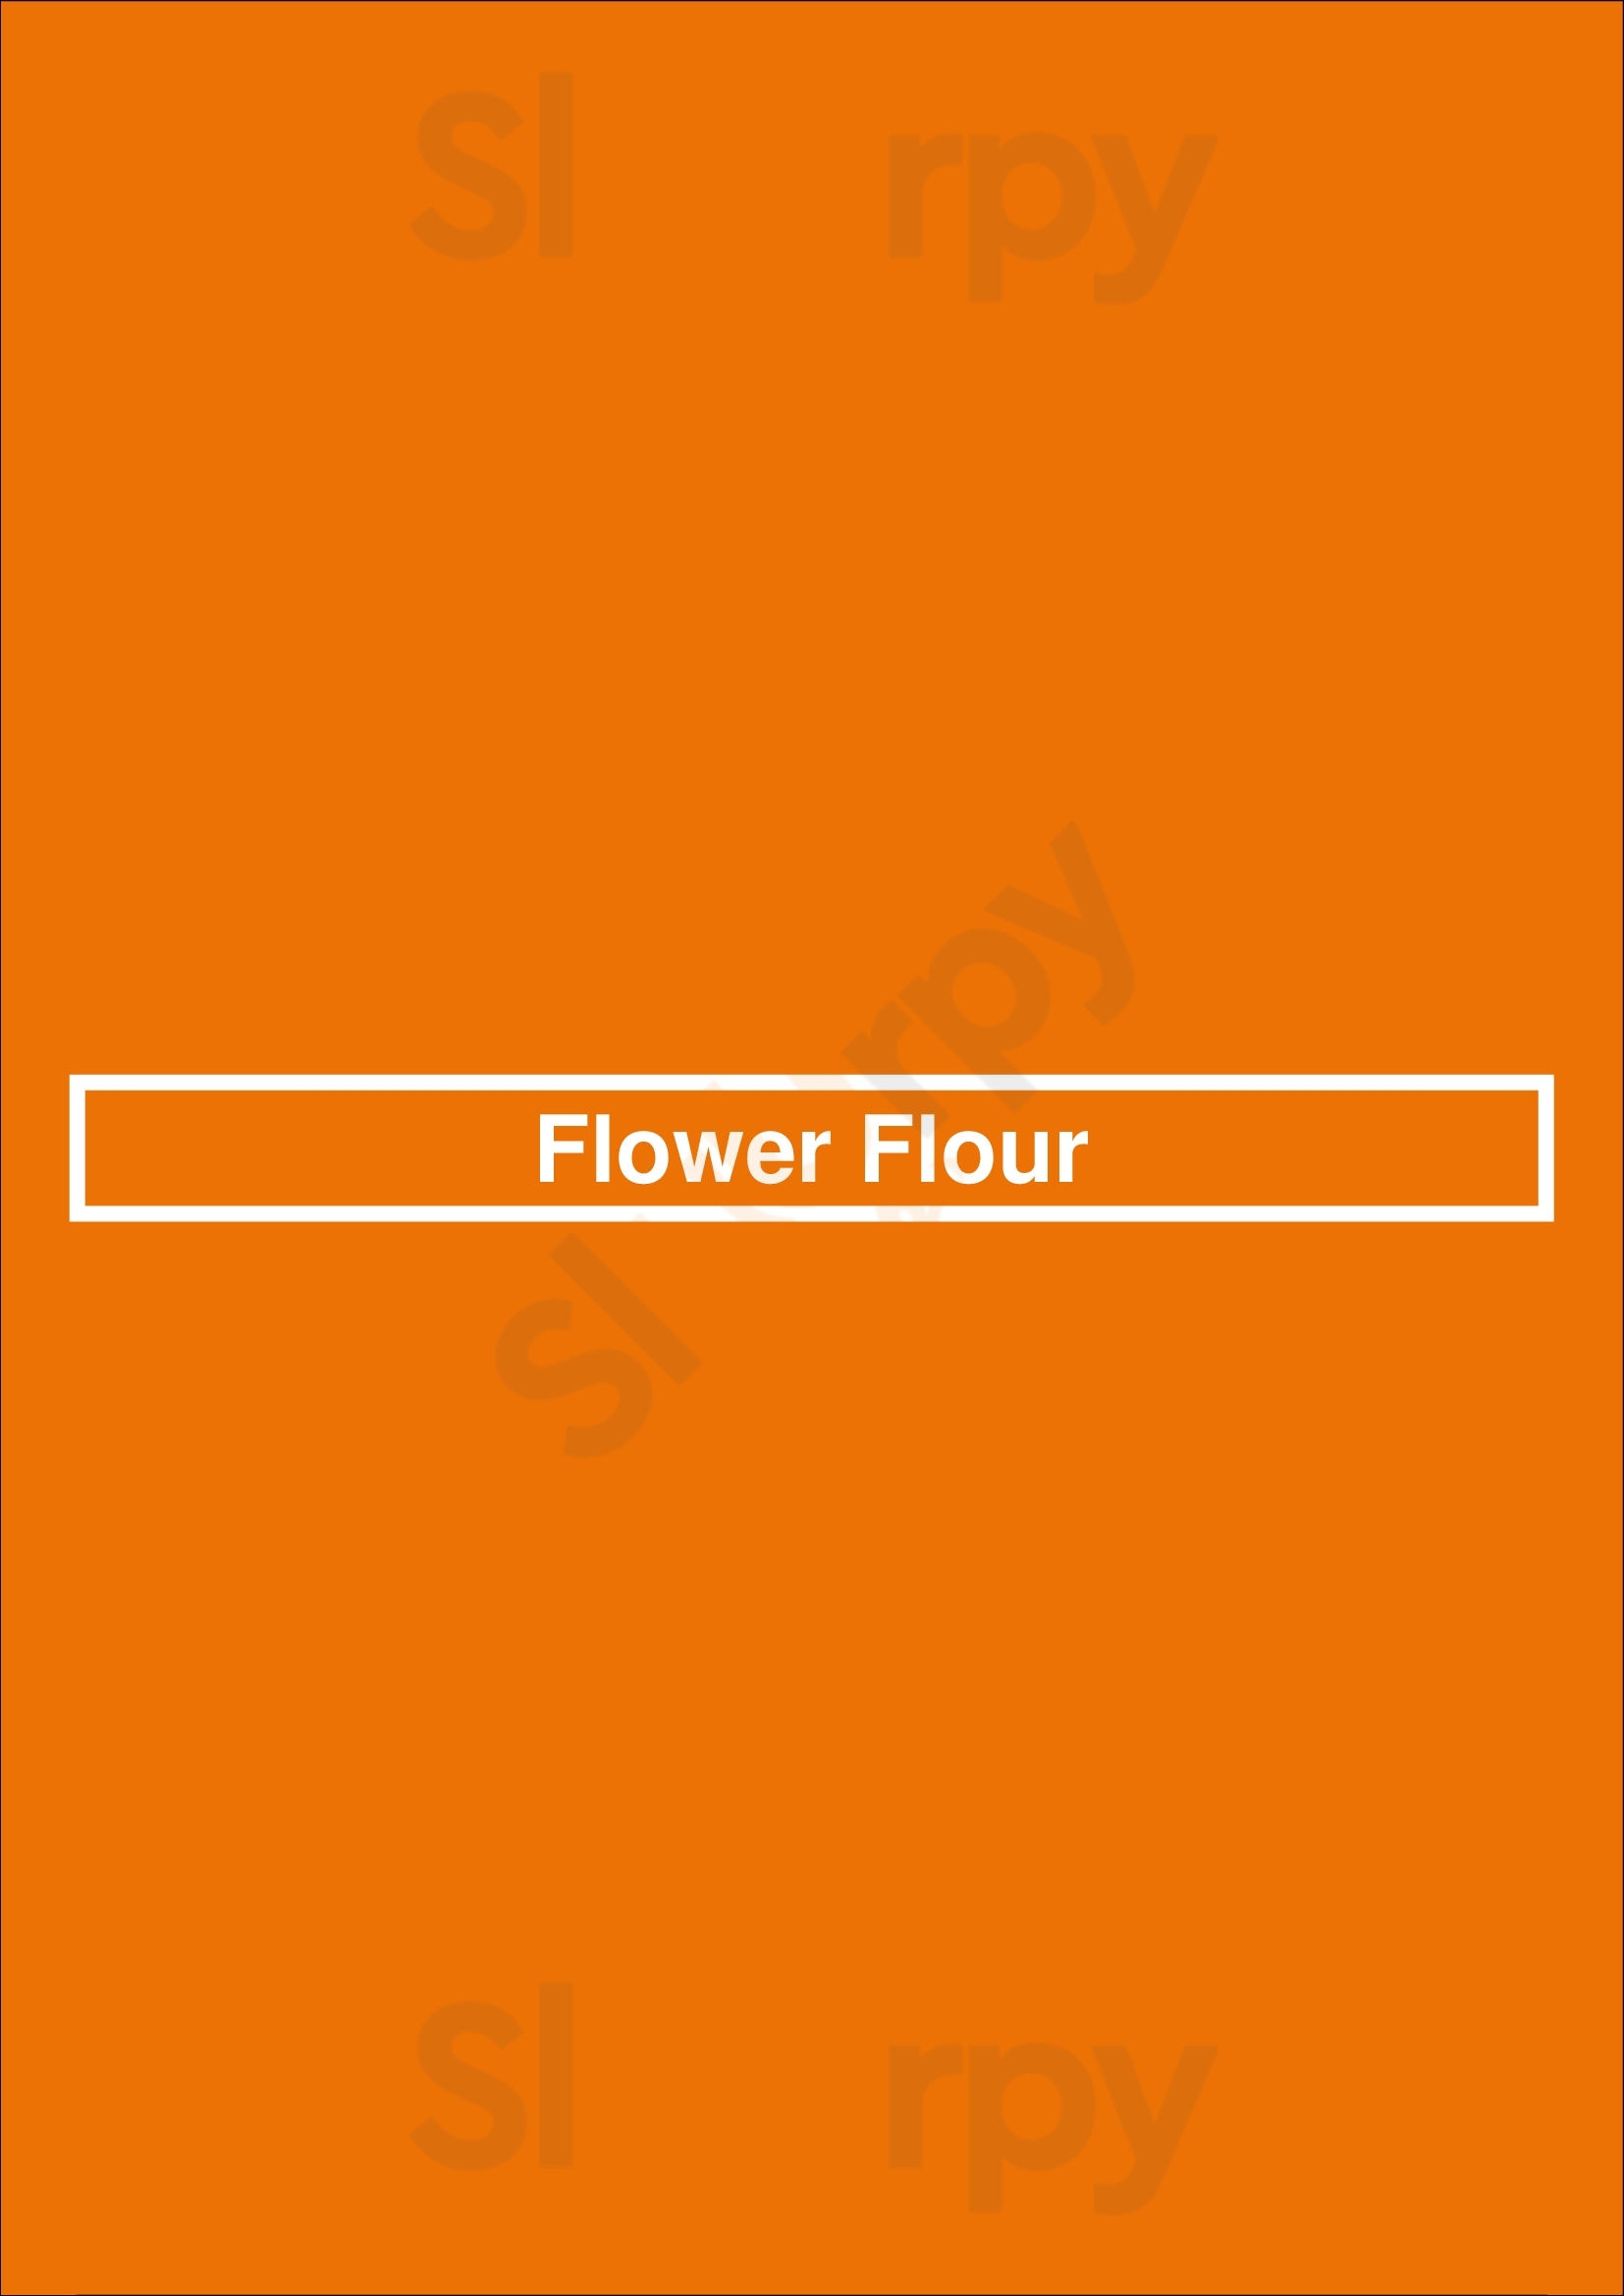 Flower Flour San Jose Menu - 1